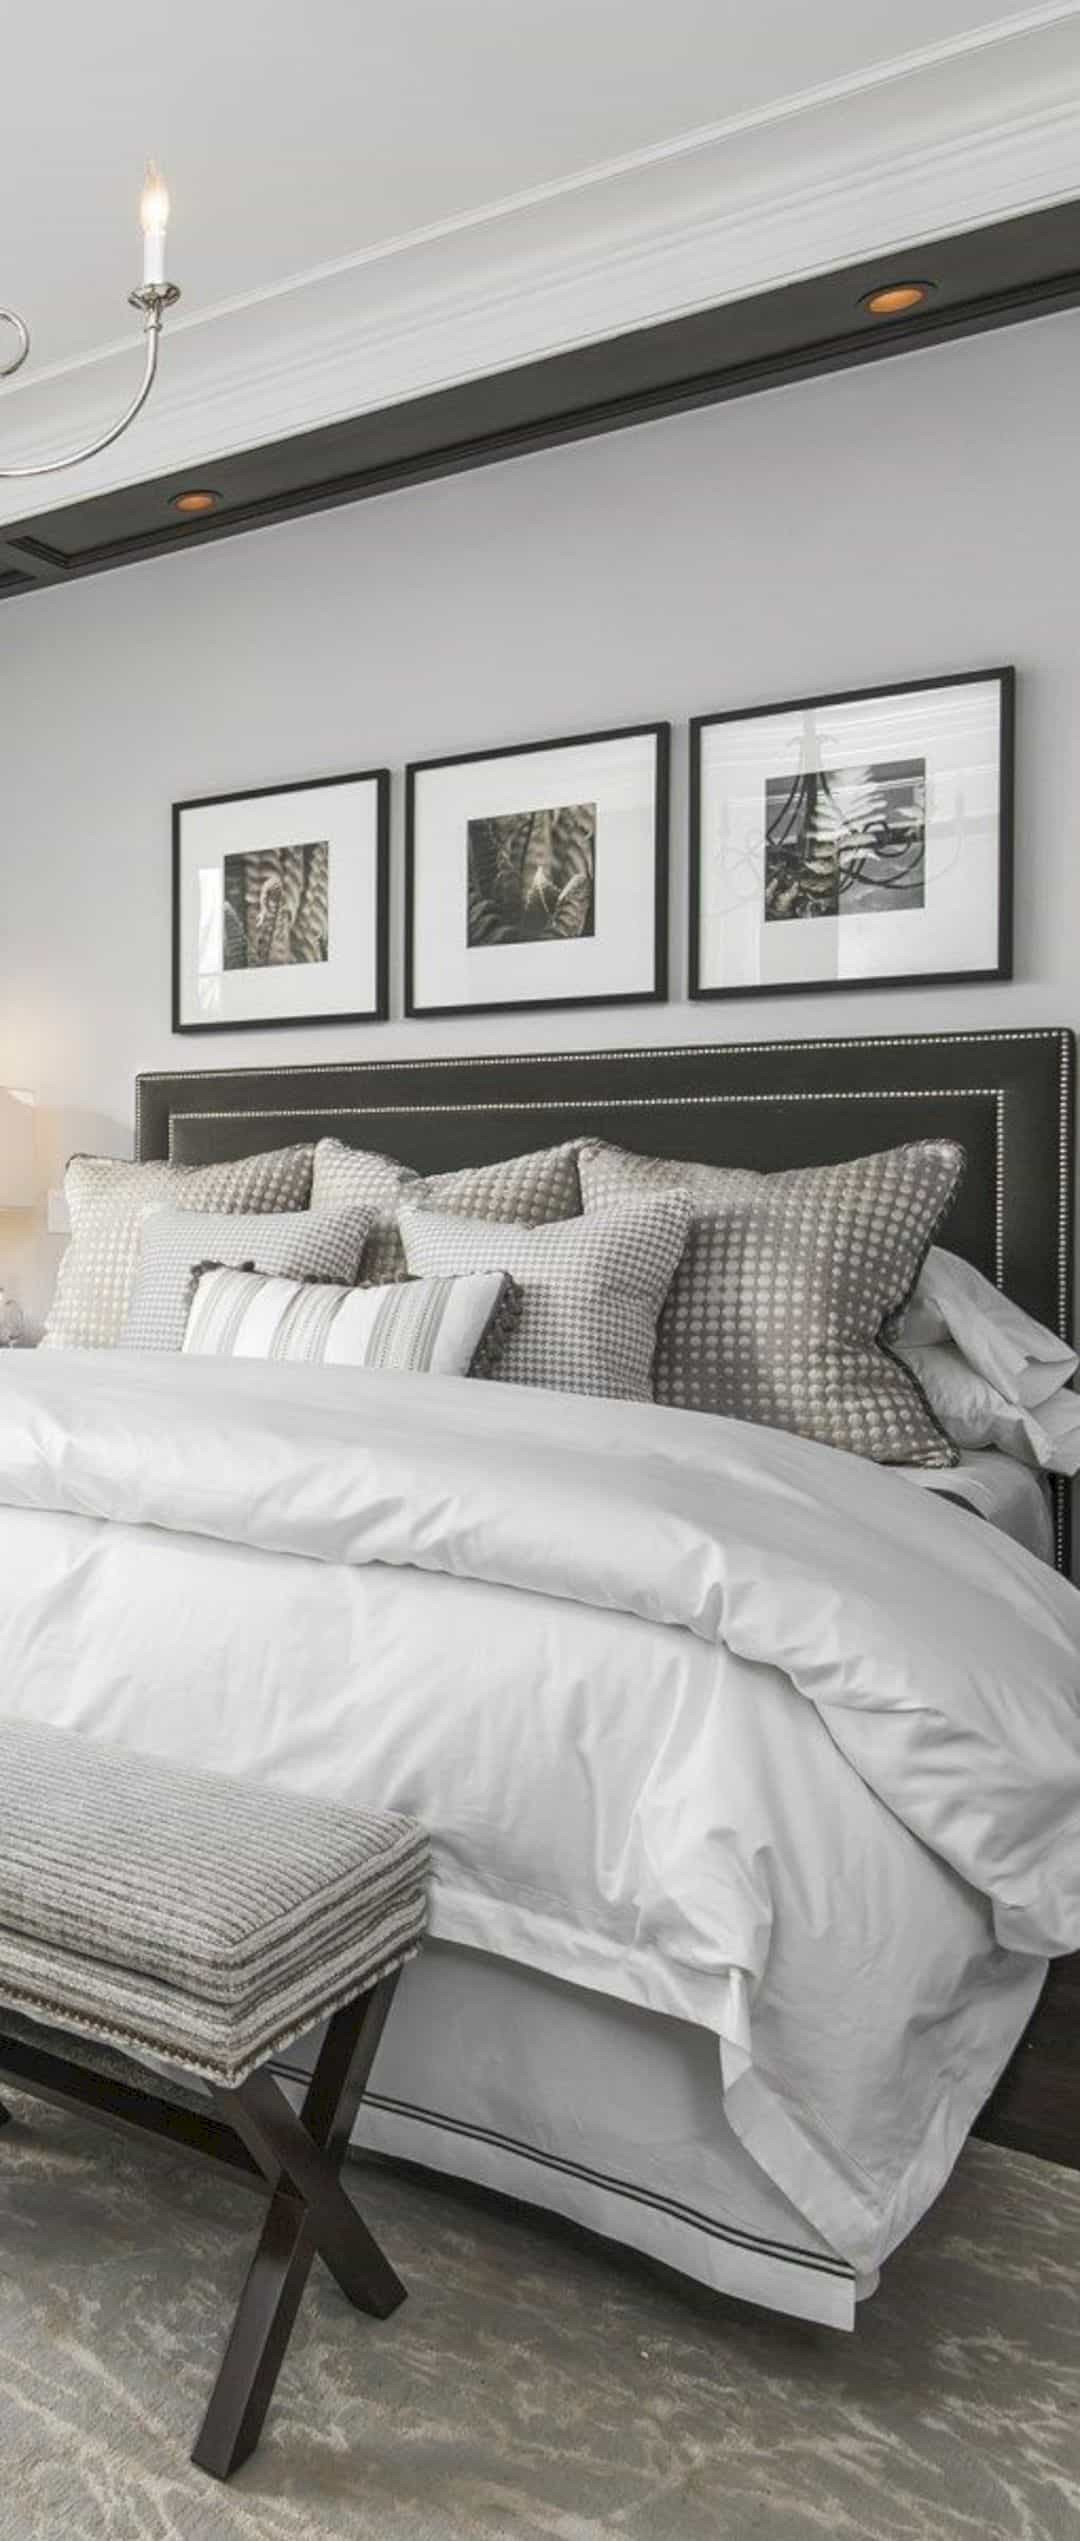 Pinterest Small Bedroom Ideas
 17 Home Decor Ideas with Frames